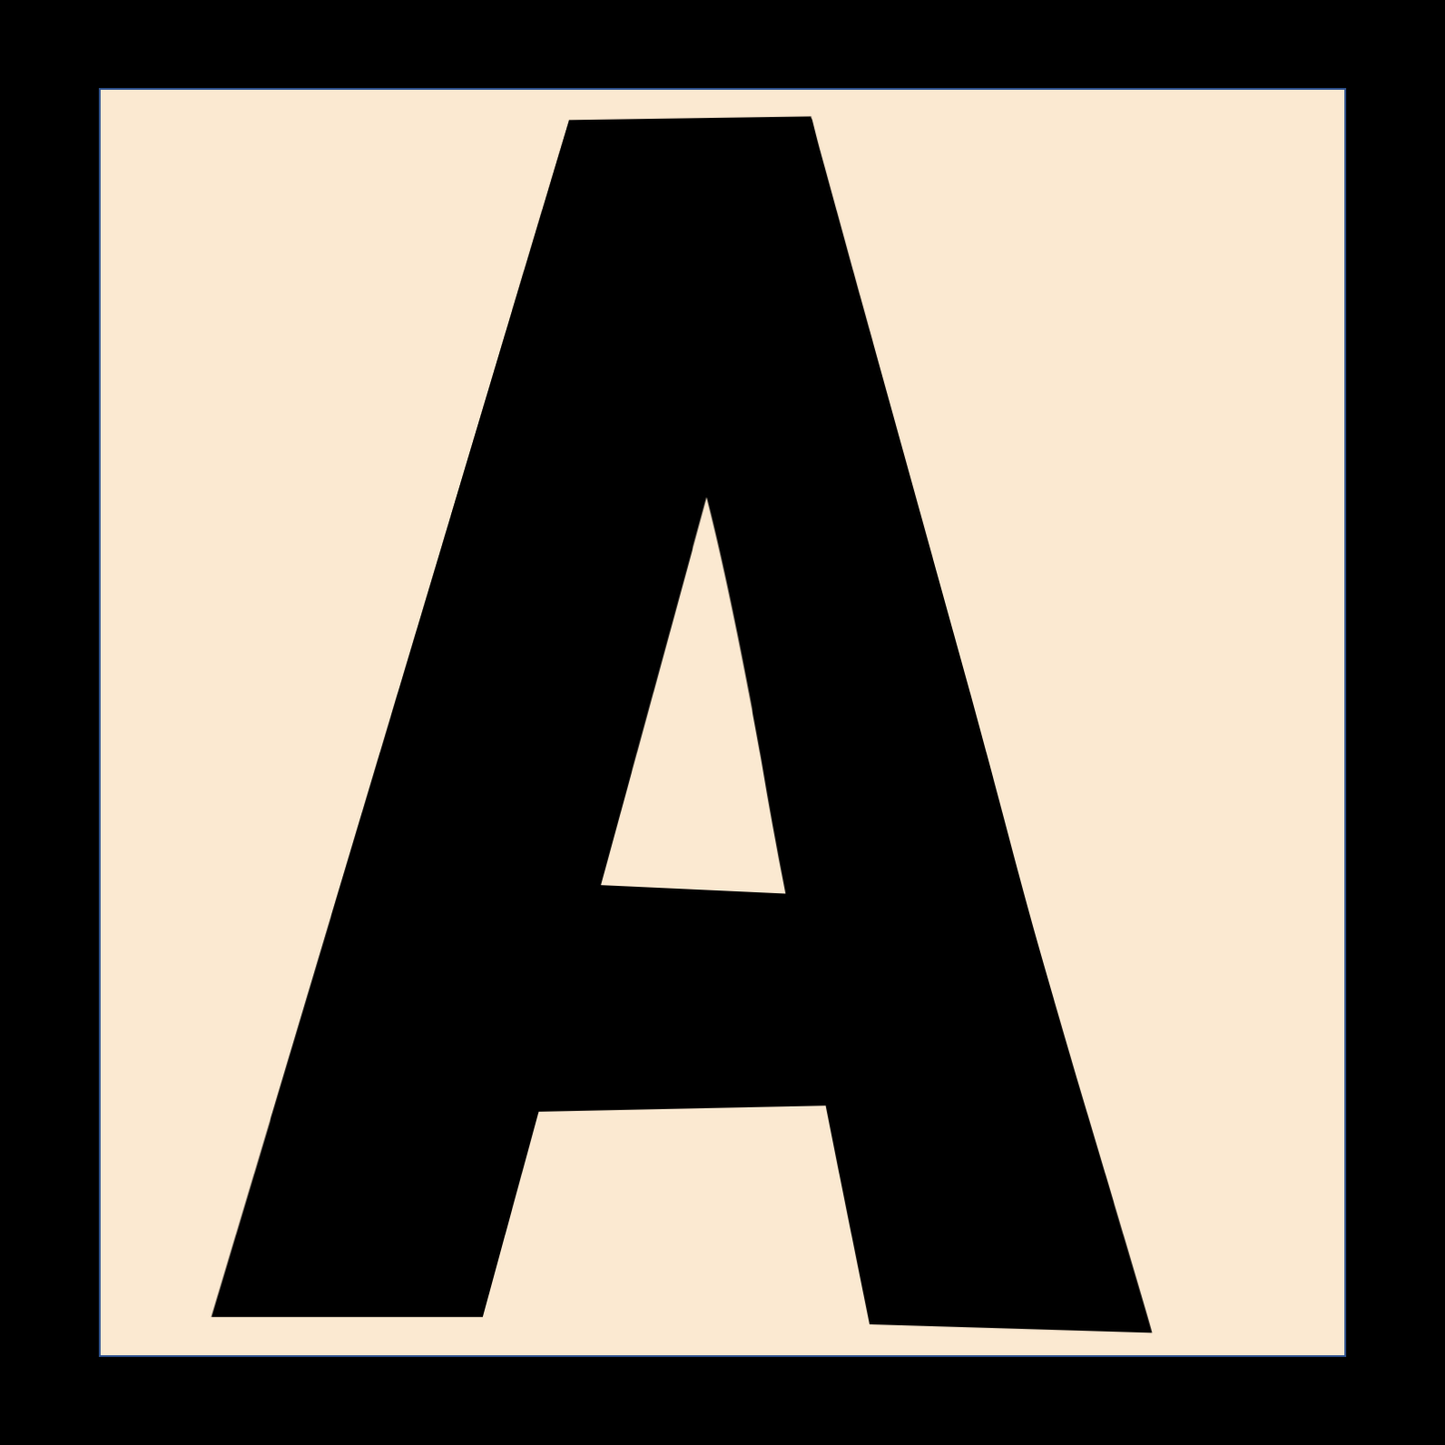 Bulletin Board Alphabet Letter Cards | Boho